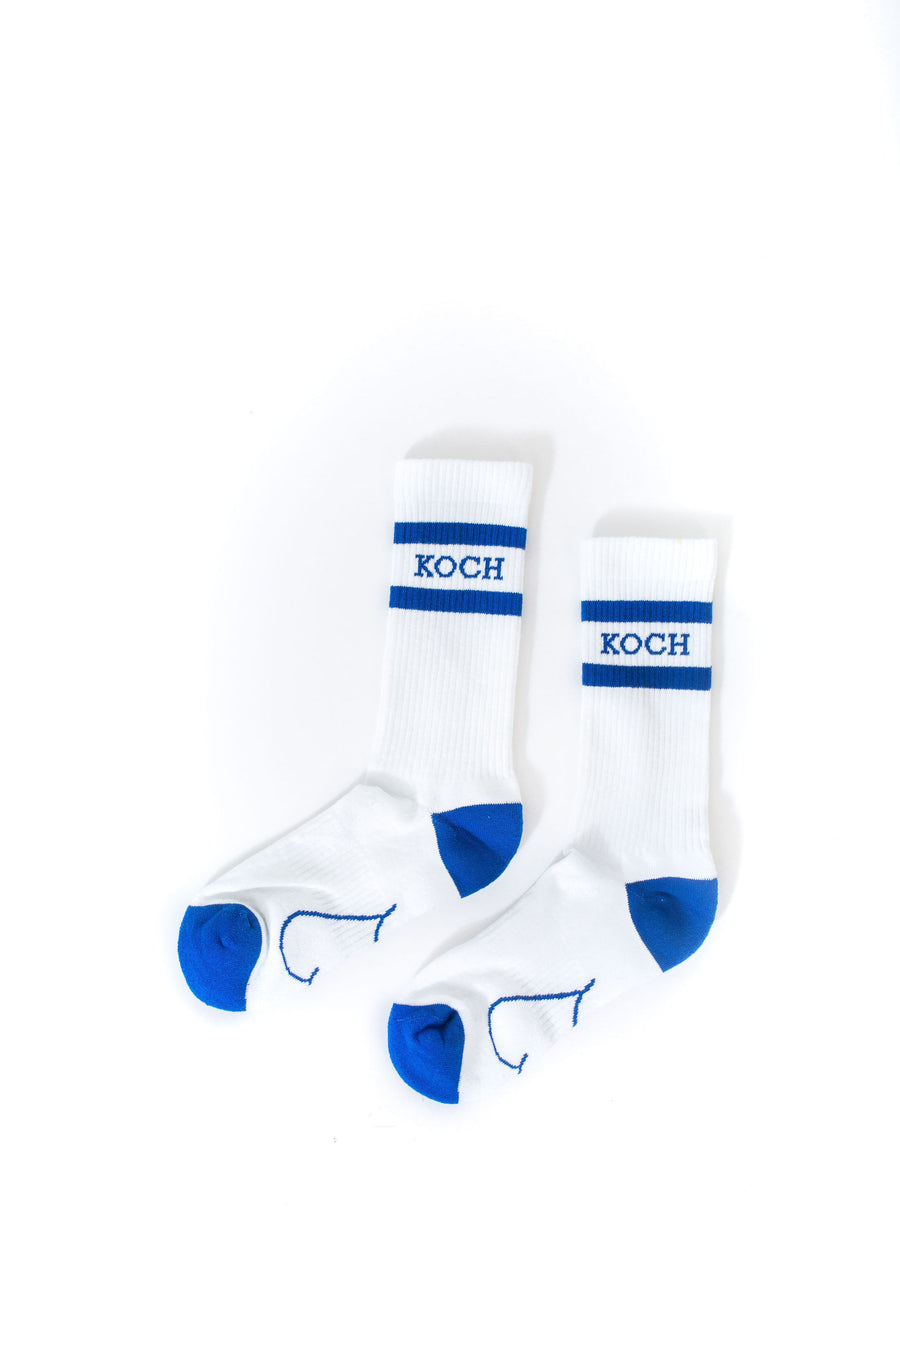 KOCH Classic Socks *Limited*Edition*